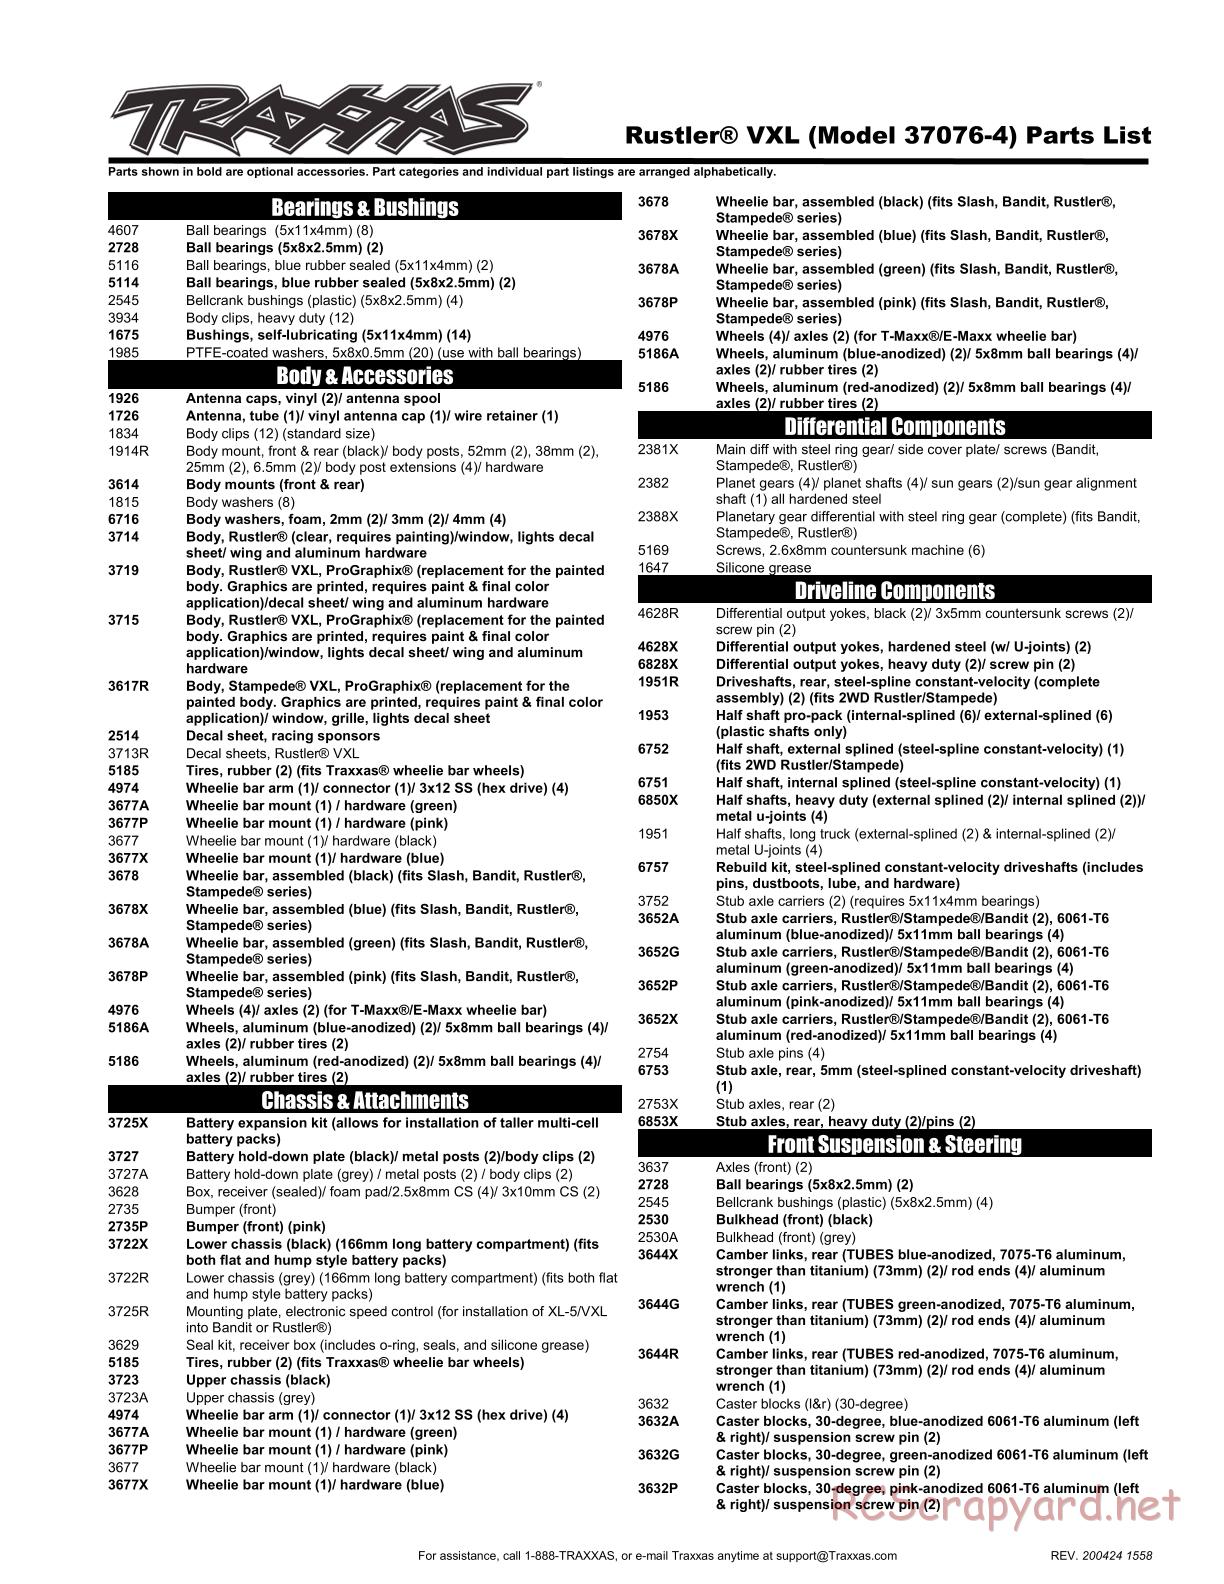 Traxxas - Rustler VXL TSM - Parts List - Page 1